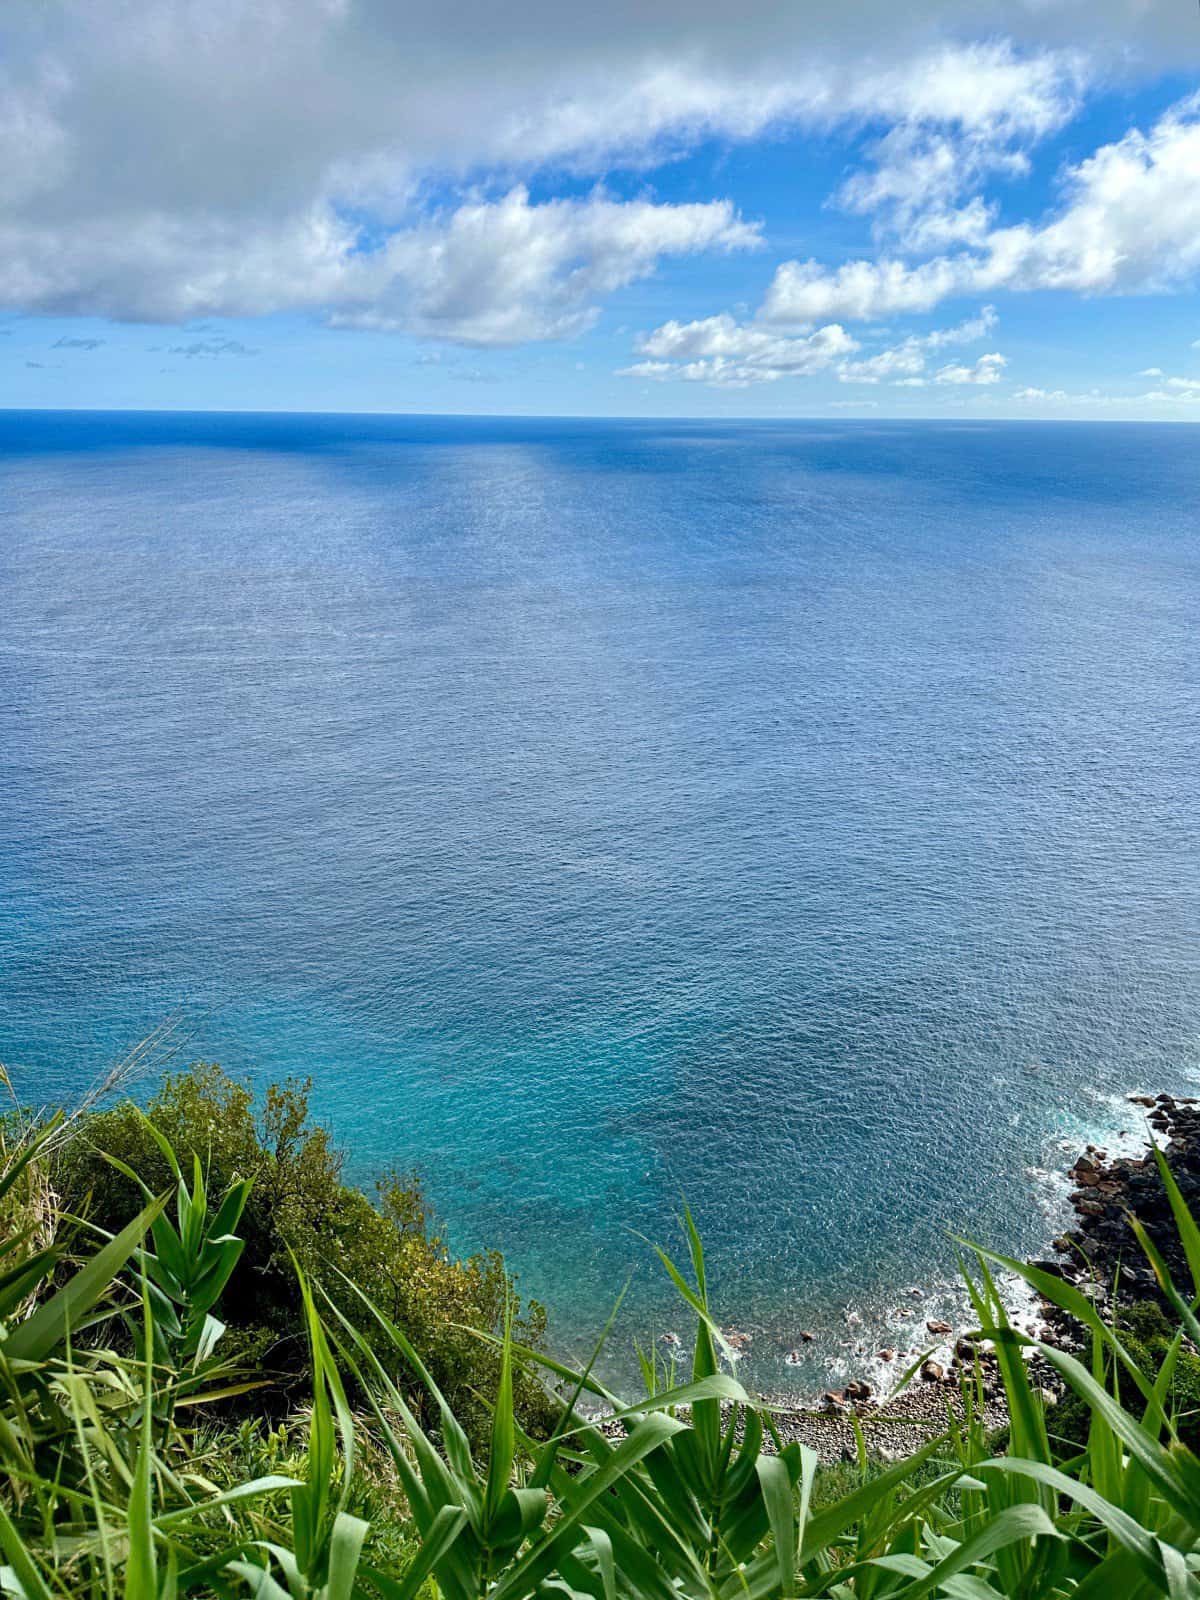 Amazing ocean views from Miradouro da Ponta do Arnel - things to do in Sao Miguel island, Azores